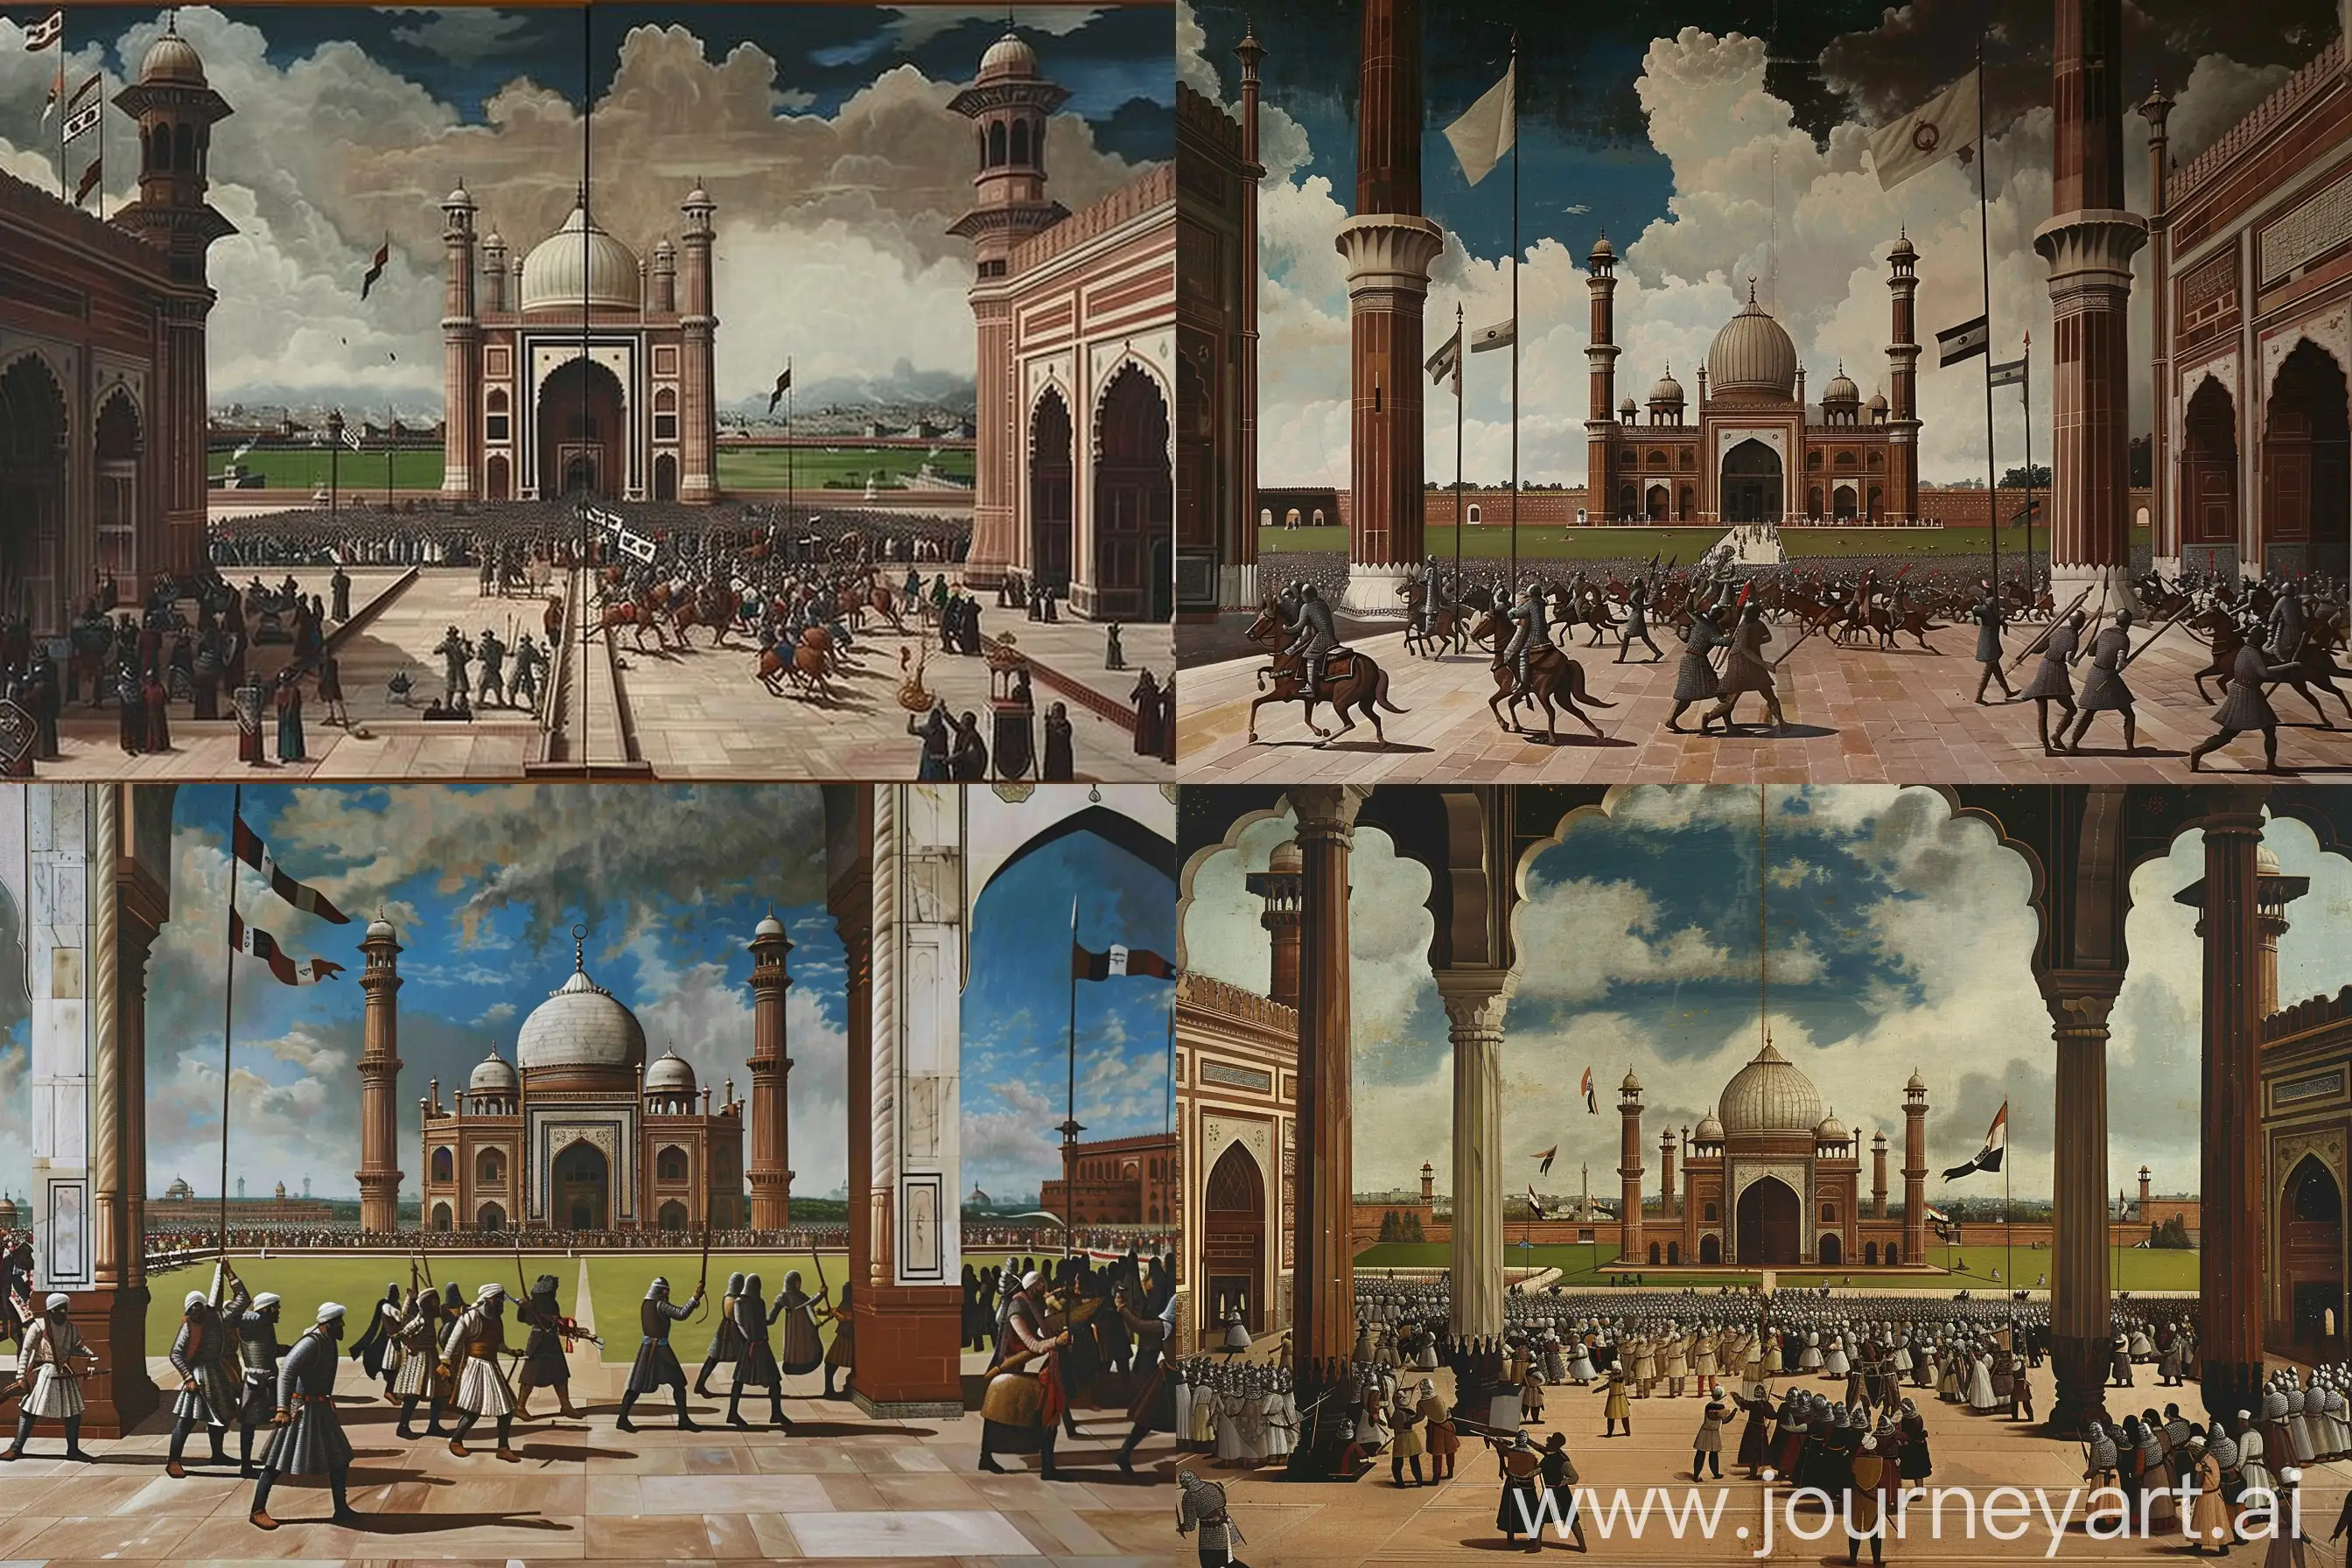 Medieval-Battle-Scene-Saracen-Knights-vs-Crusaders-in-Delhi-Jama-Masjid-Courtyard